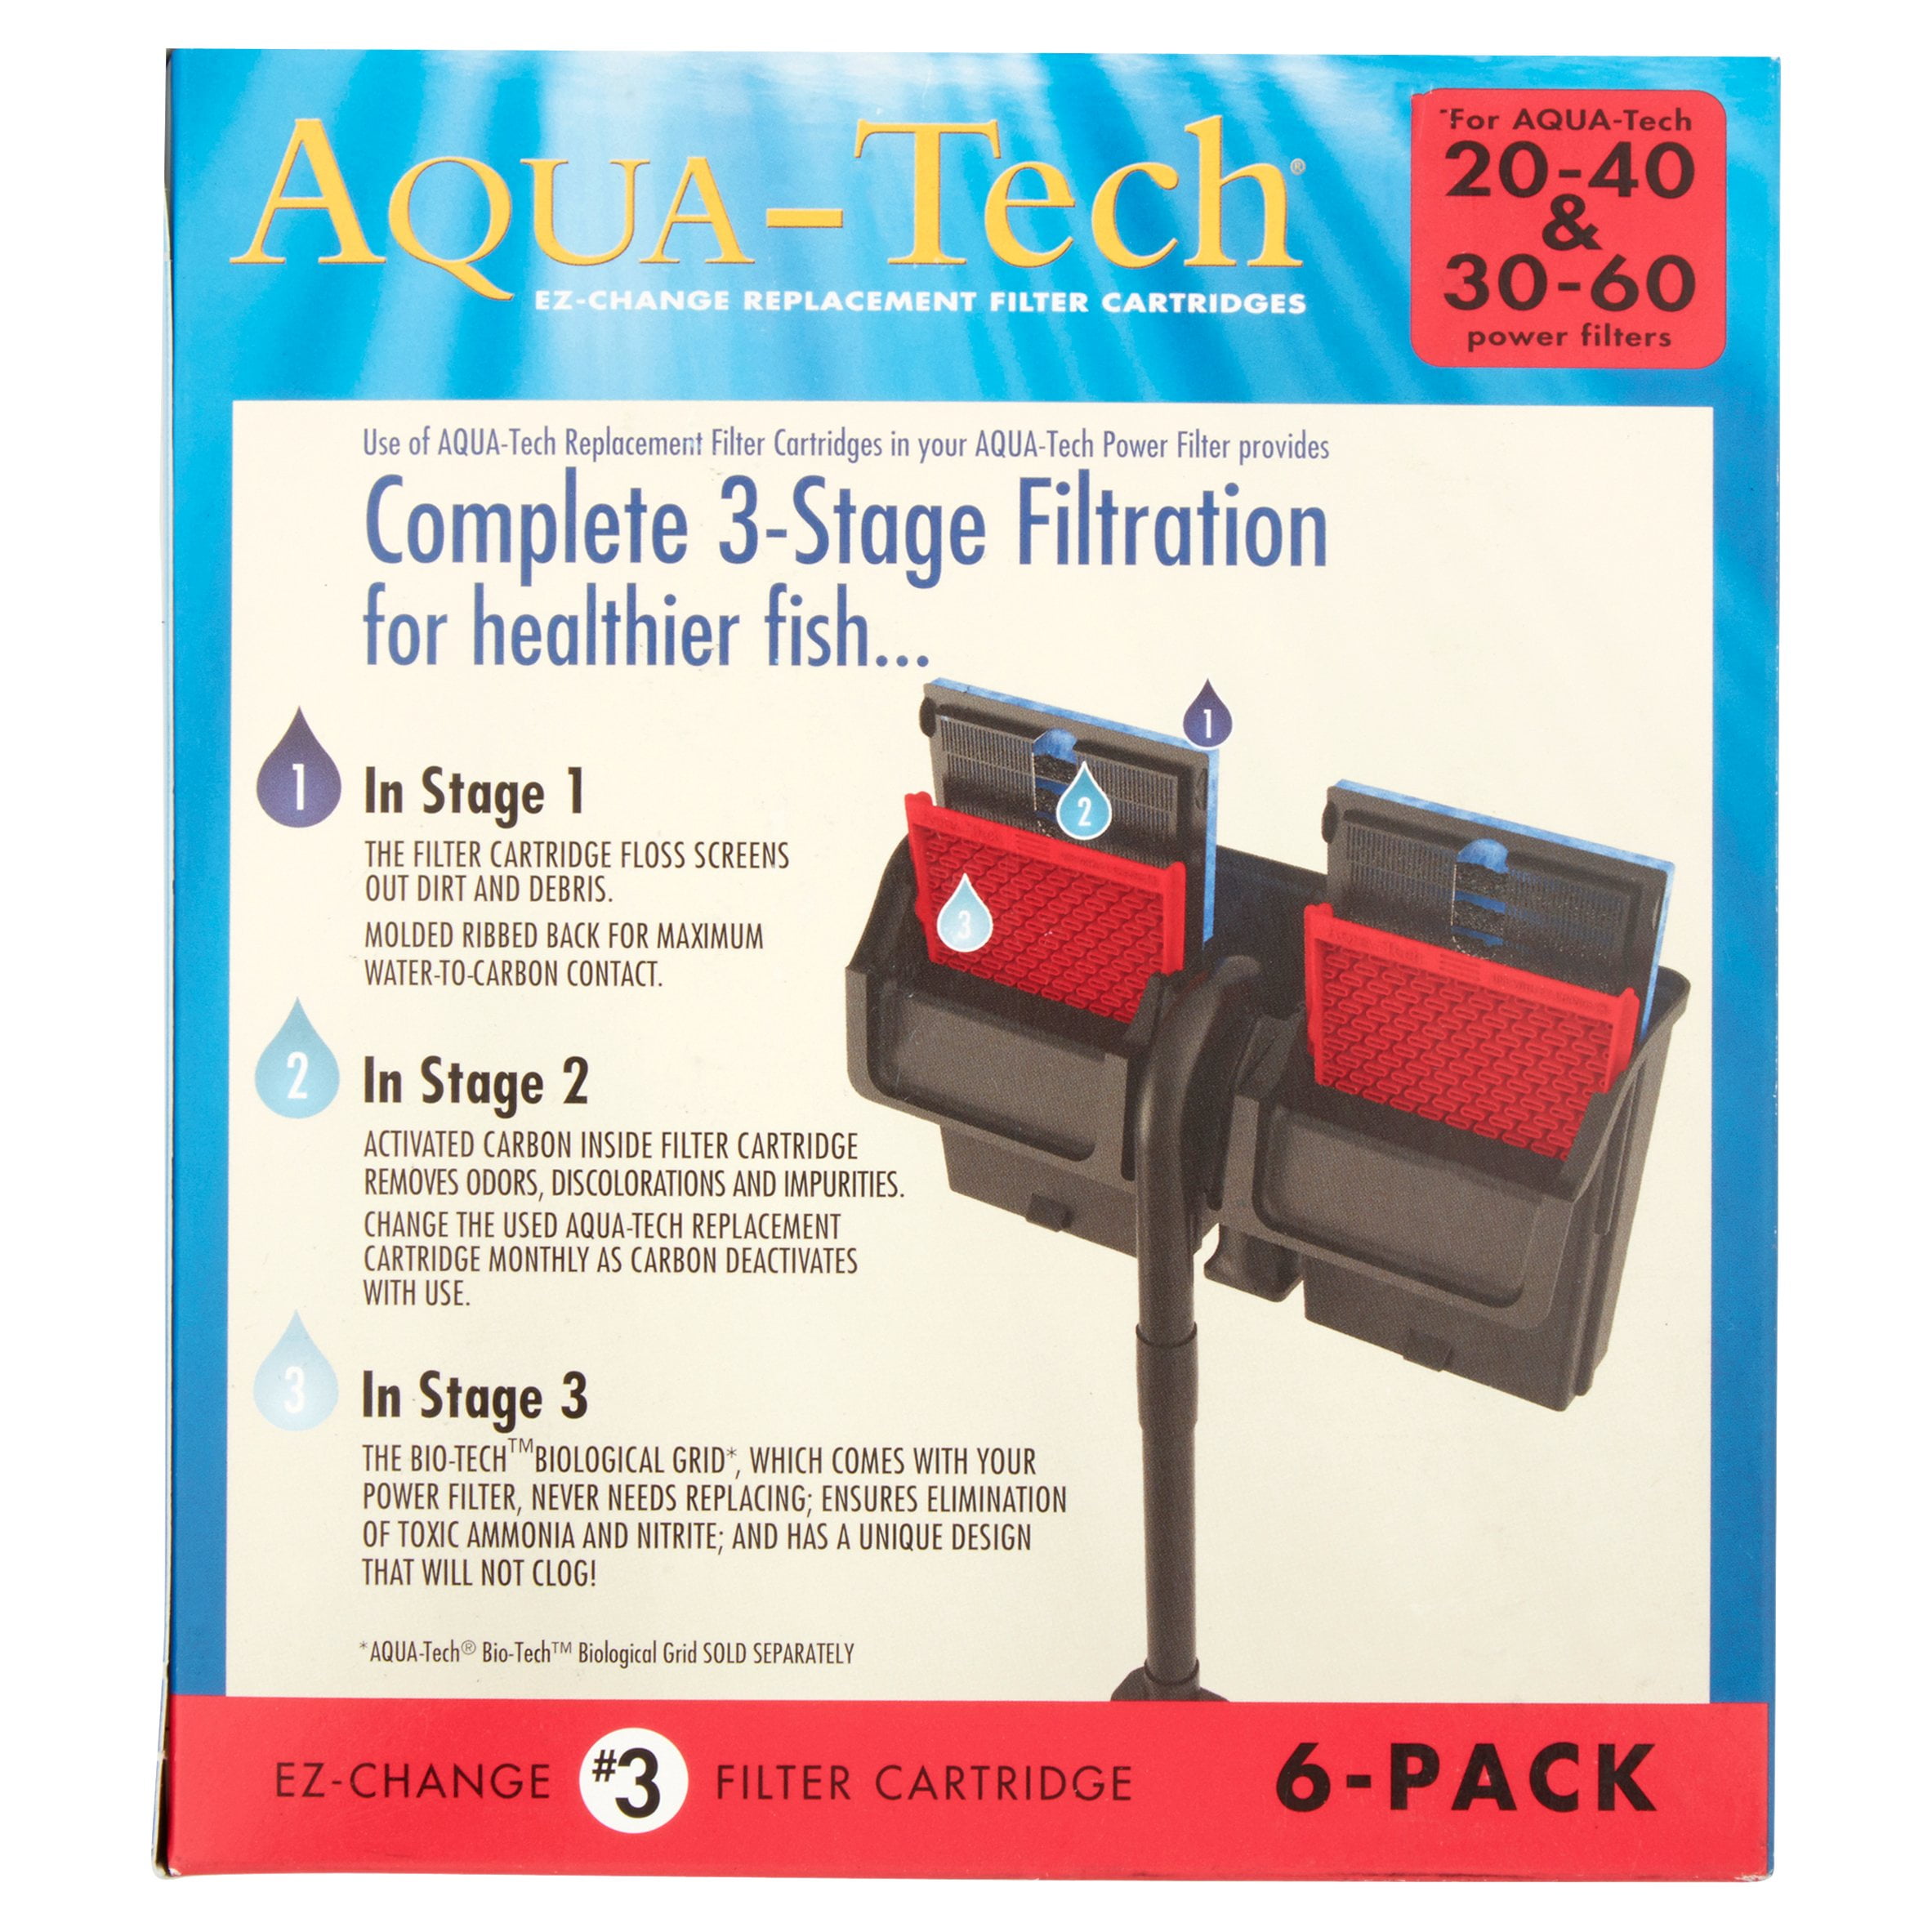 Aqua-Tech EZ-Change Aquarium Filter Cartridge 10-20 Power Filters 3-Pack